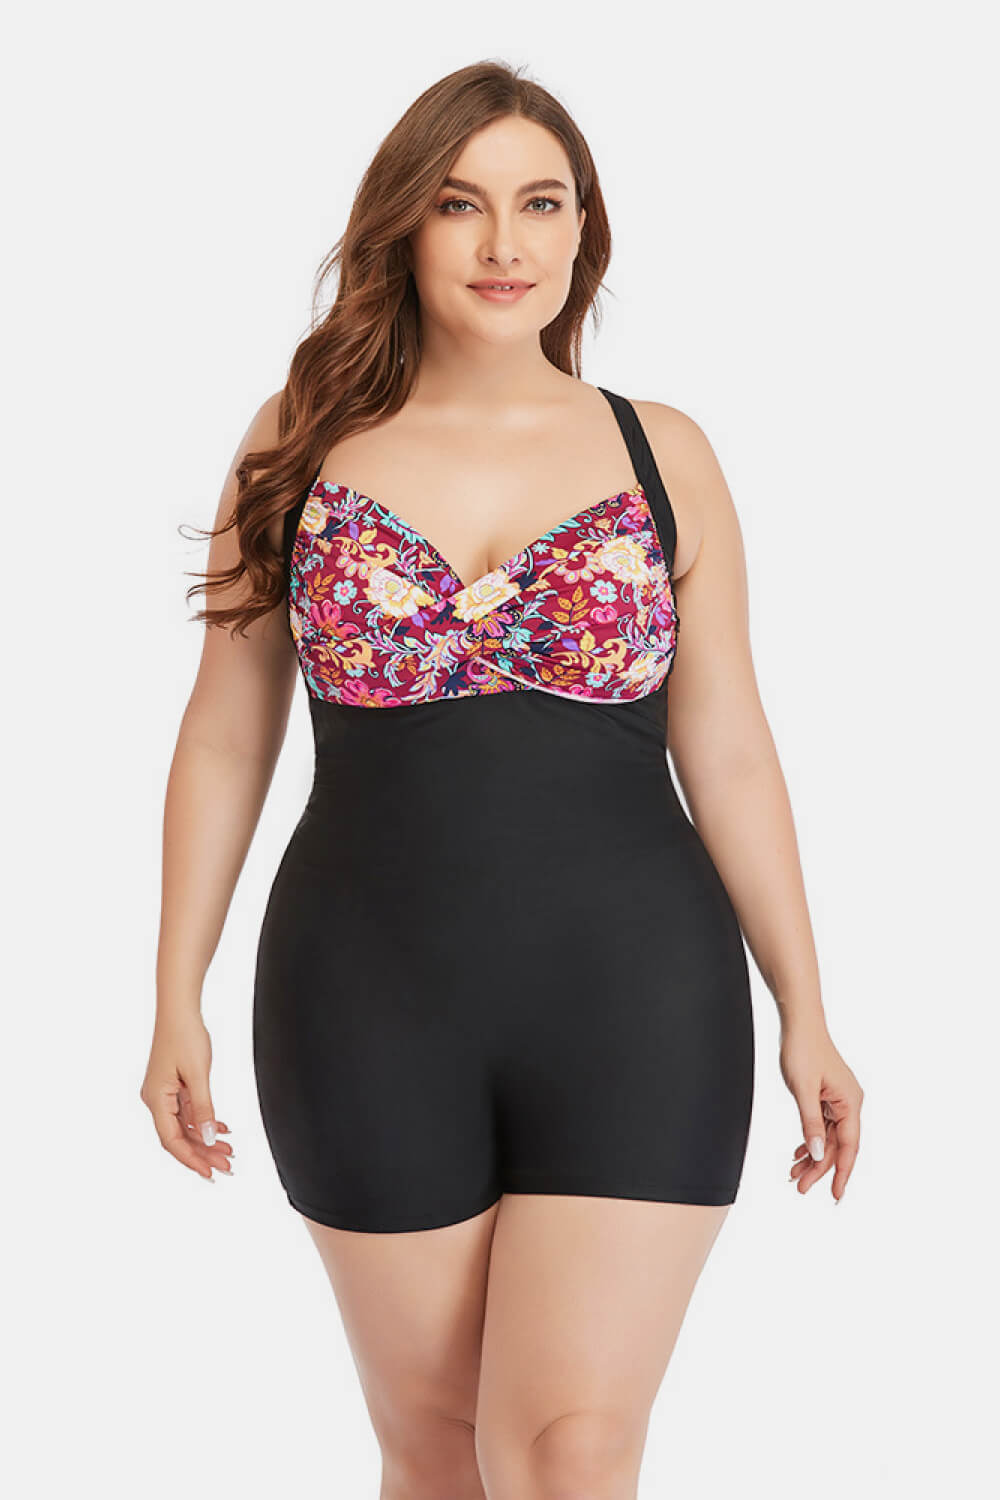 Tina Plus Size Swimsuit